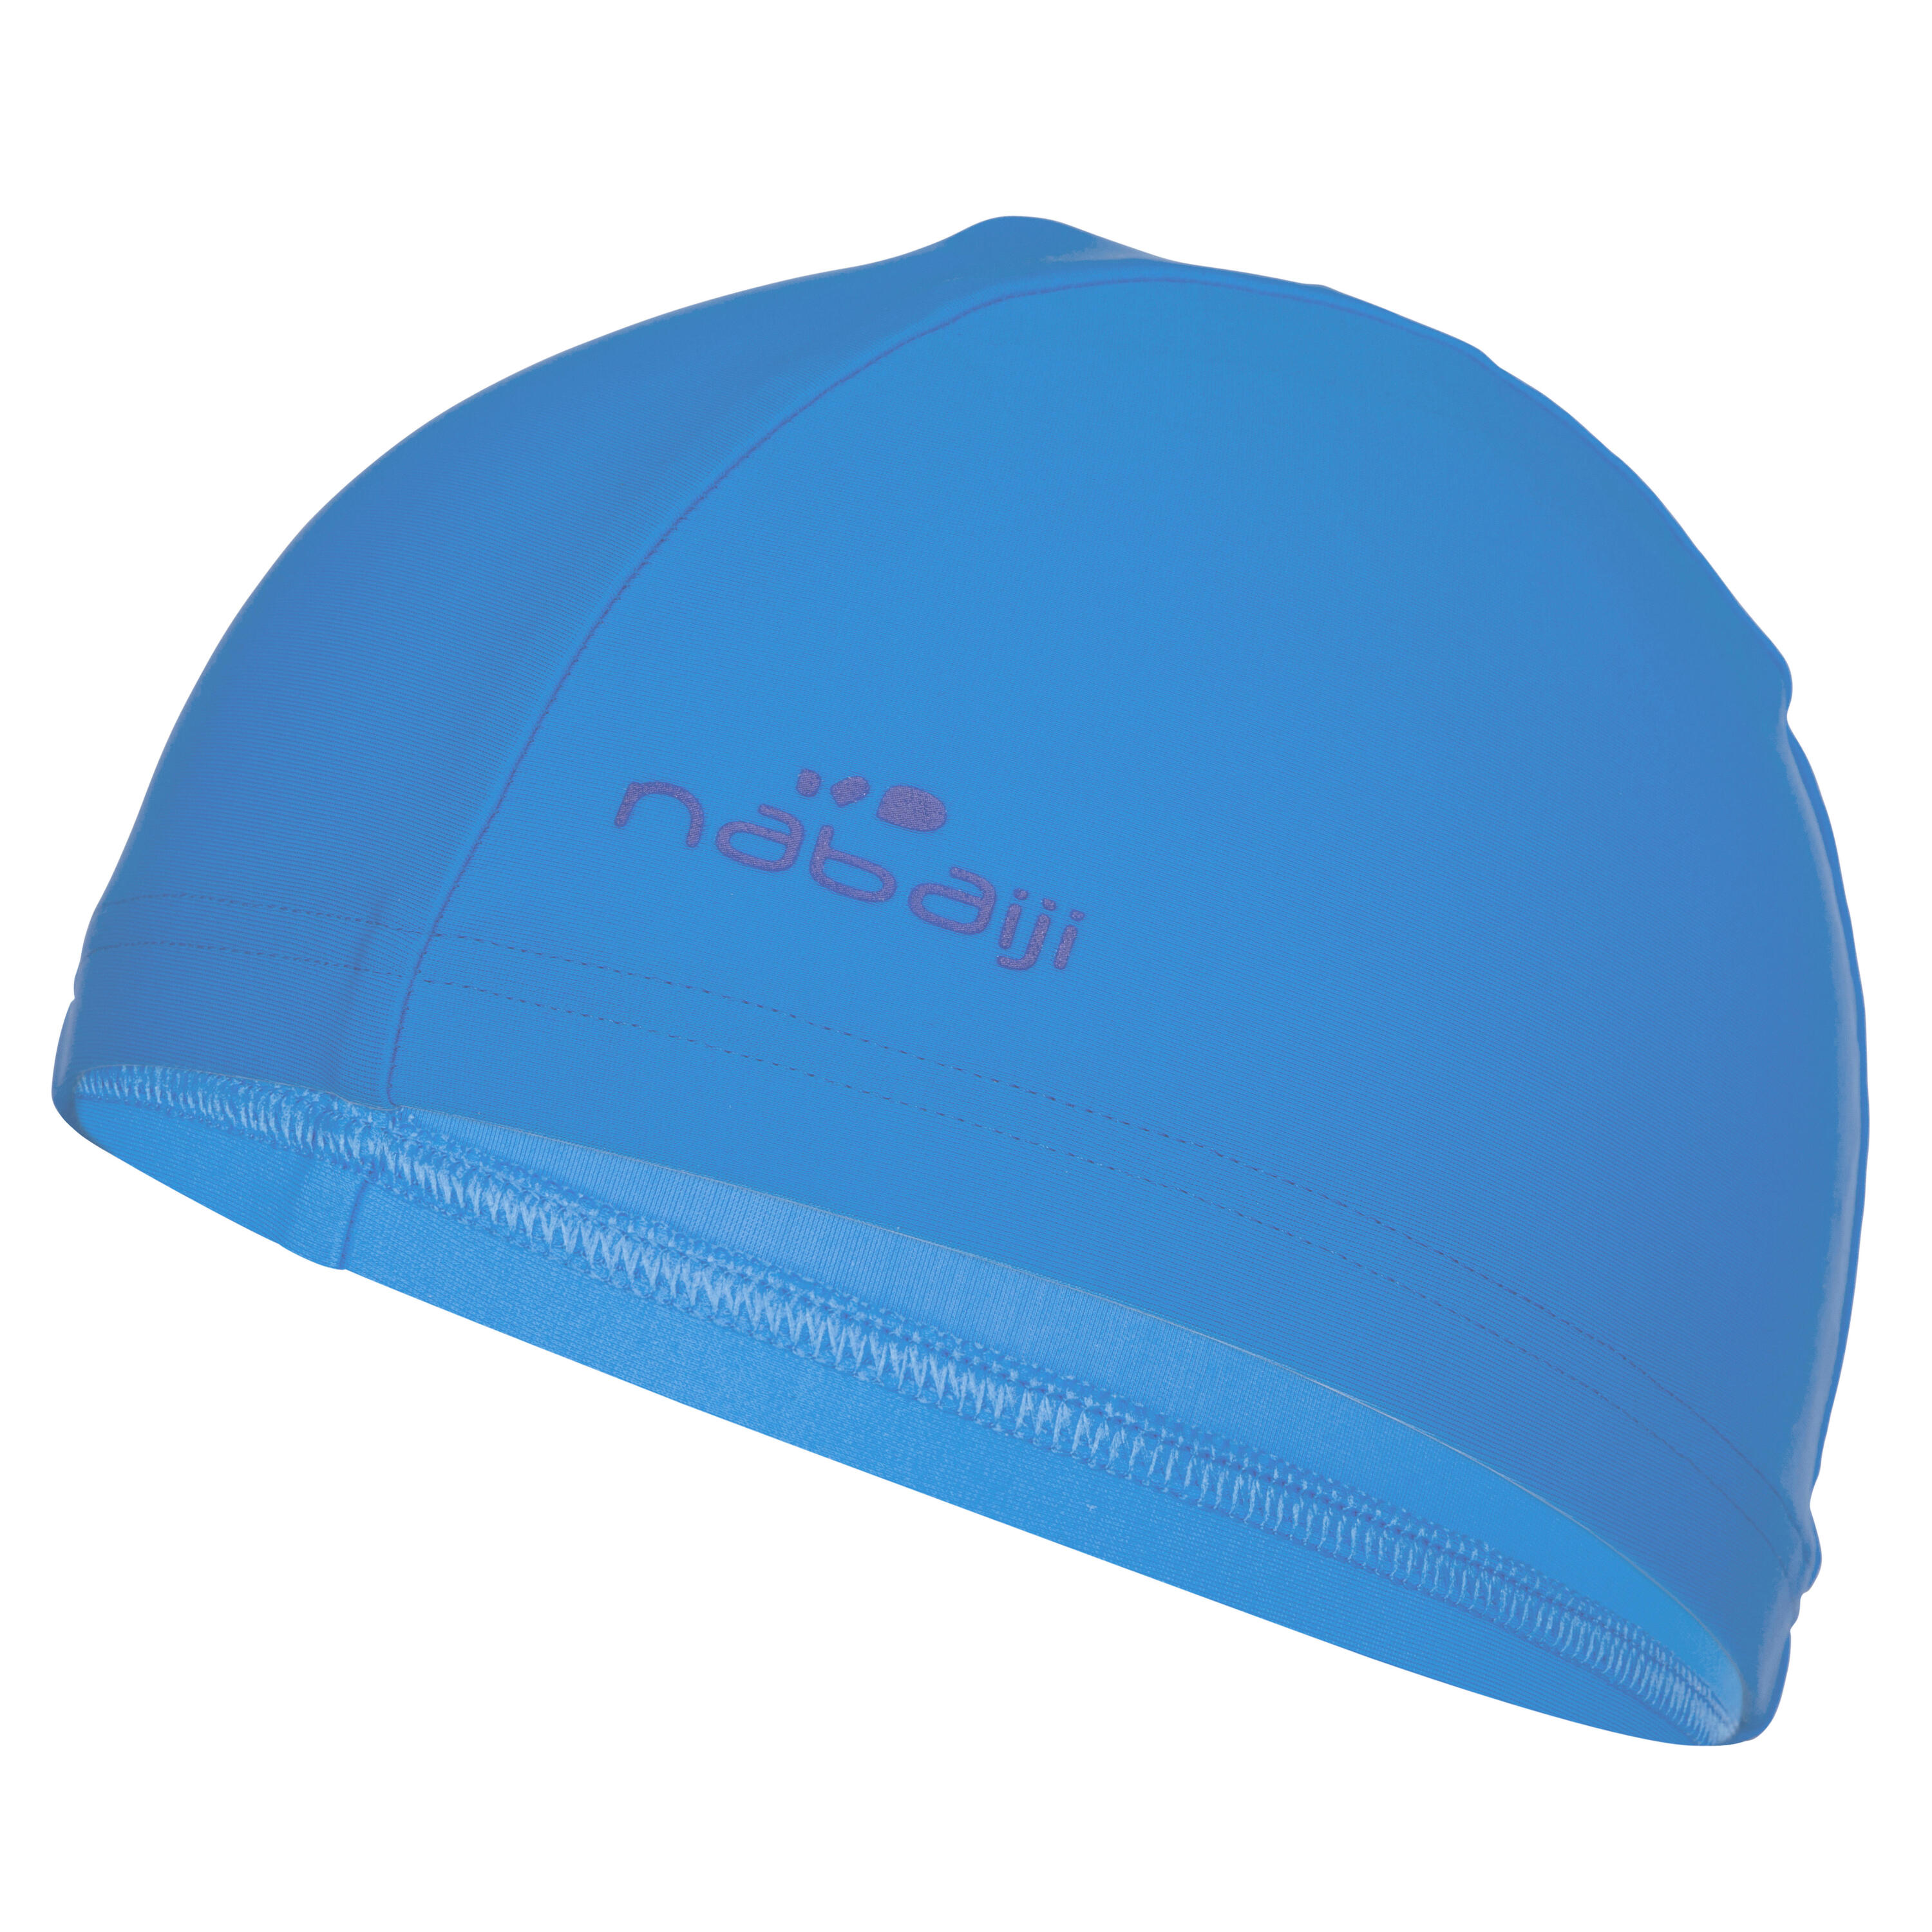 Mesh swim cap - Plain fabric - Blue 2/3